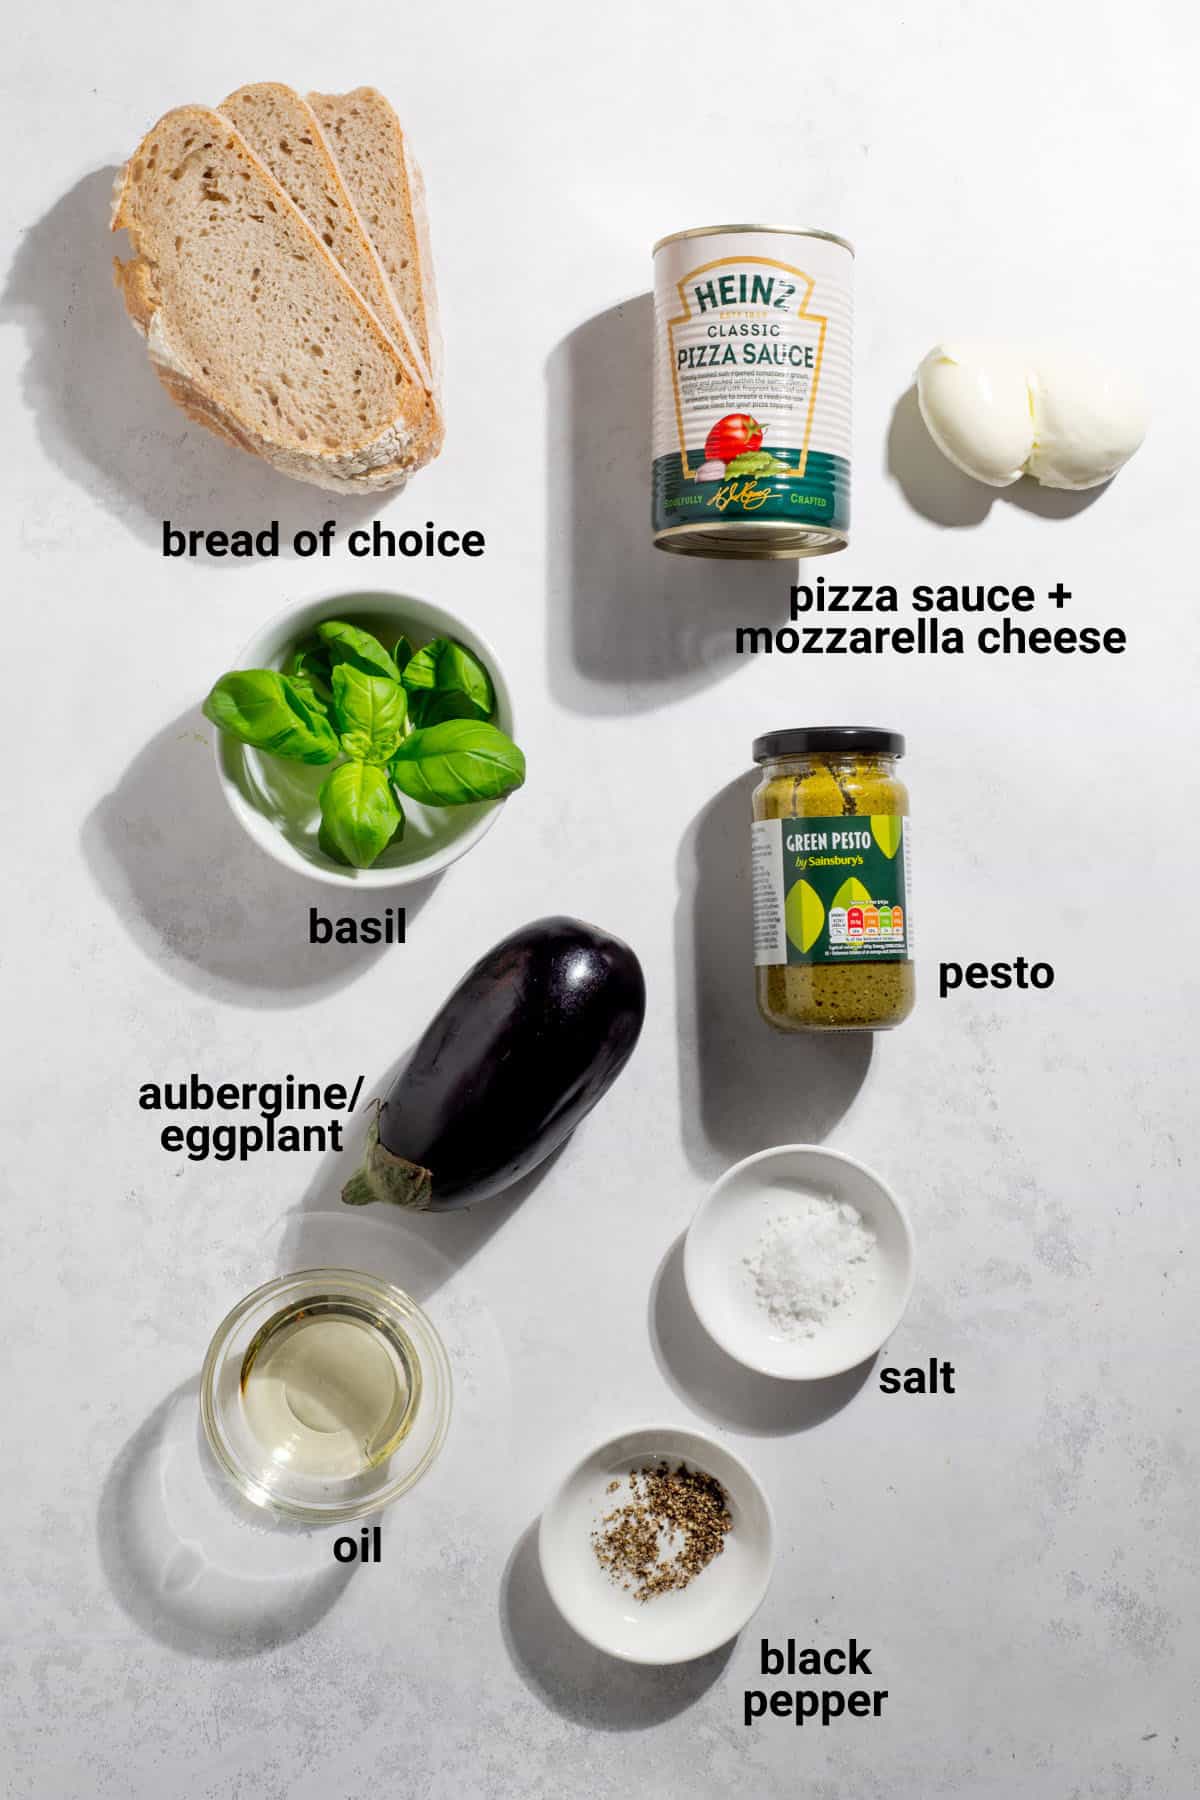 Aubergine/eggplant pizza toast ingredients.